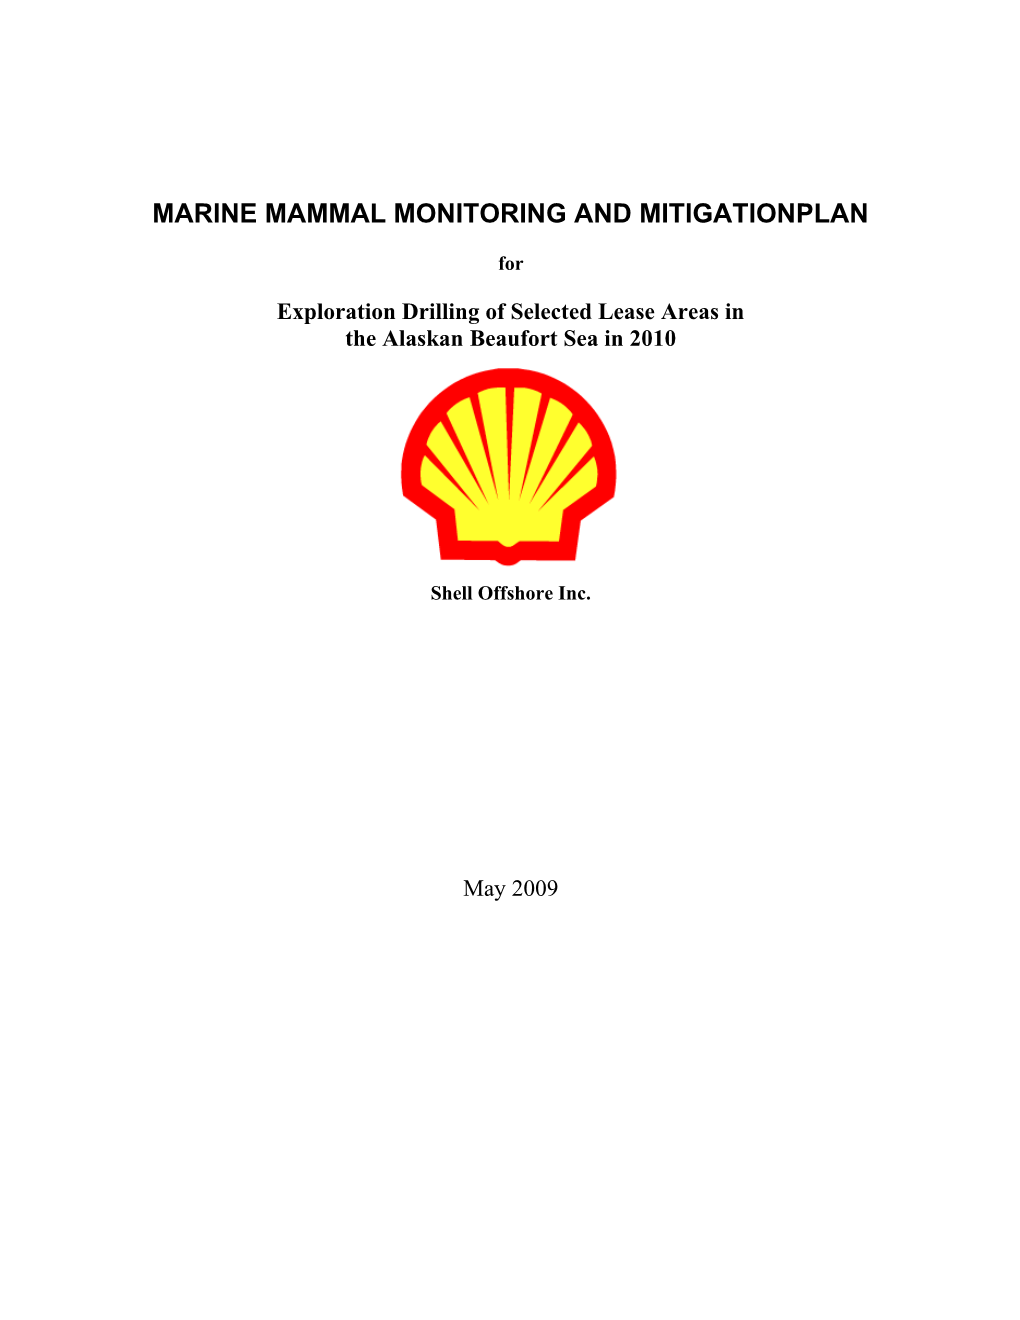 Integrated Marine Mammal Monitoring Plan